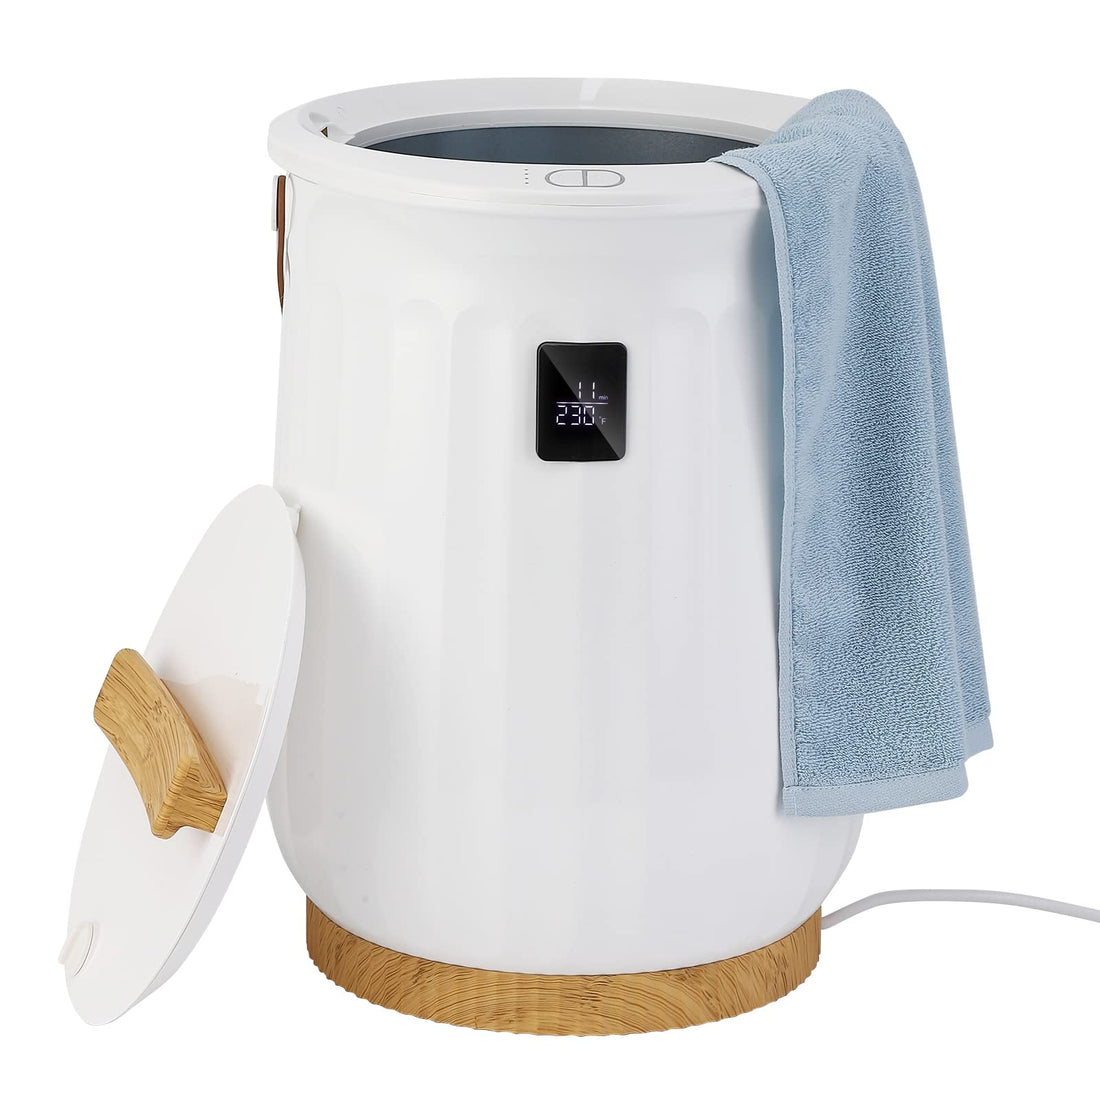 20L 450W Towel Warmer Bucket, LCD Display for Bathroom Luxury